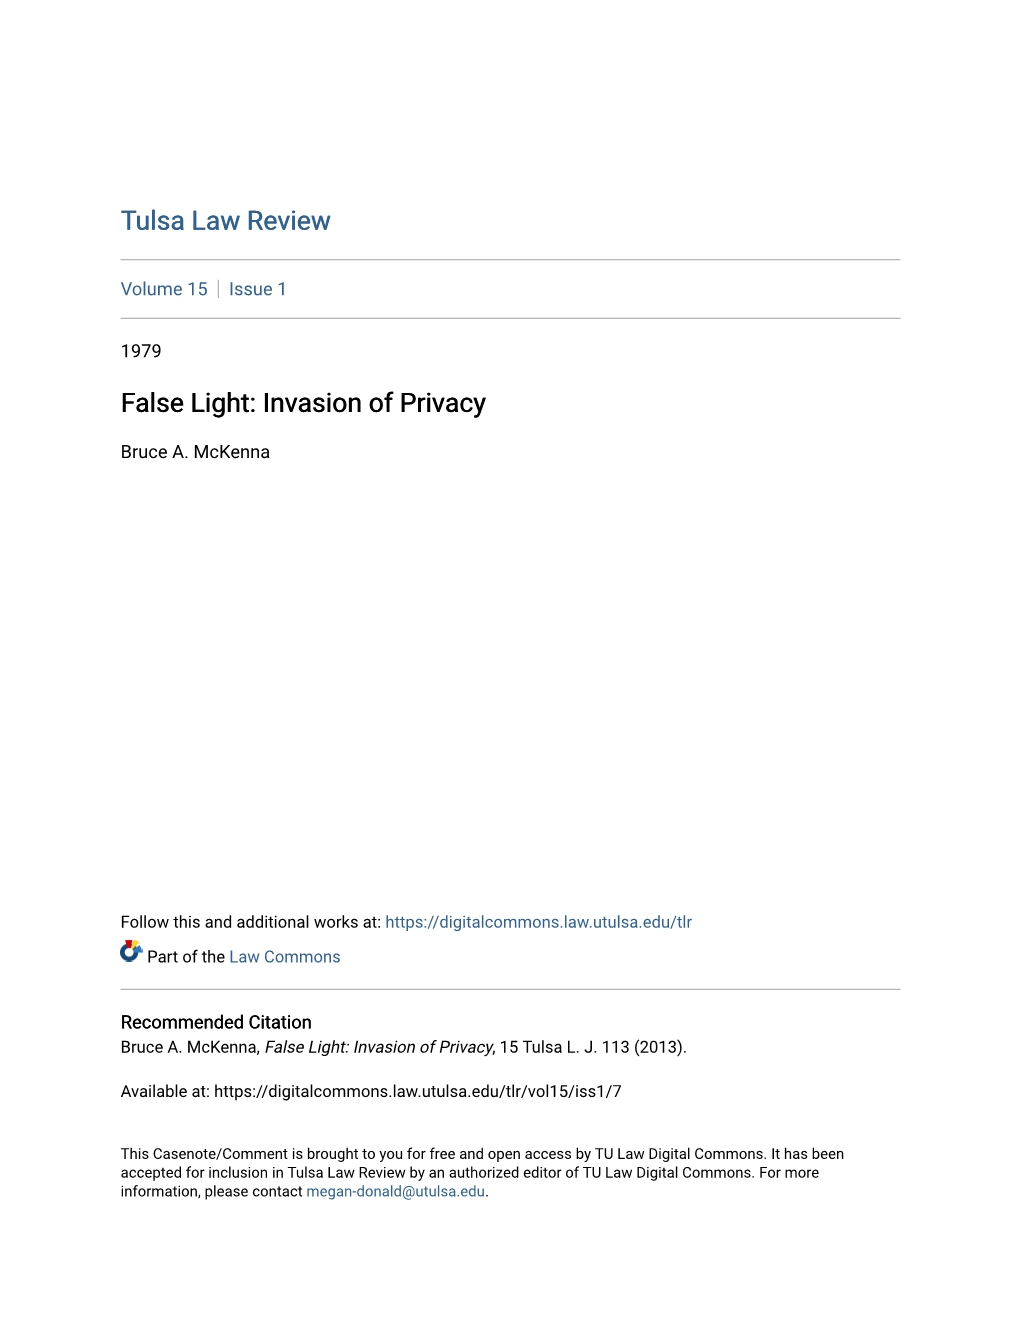 False Light: Invasion of Privacy